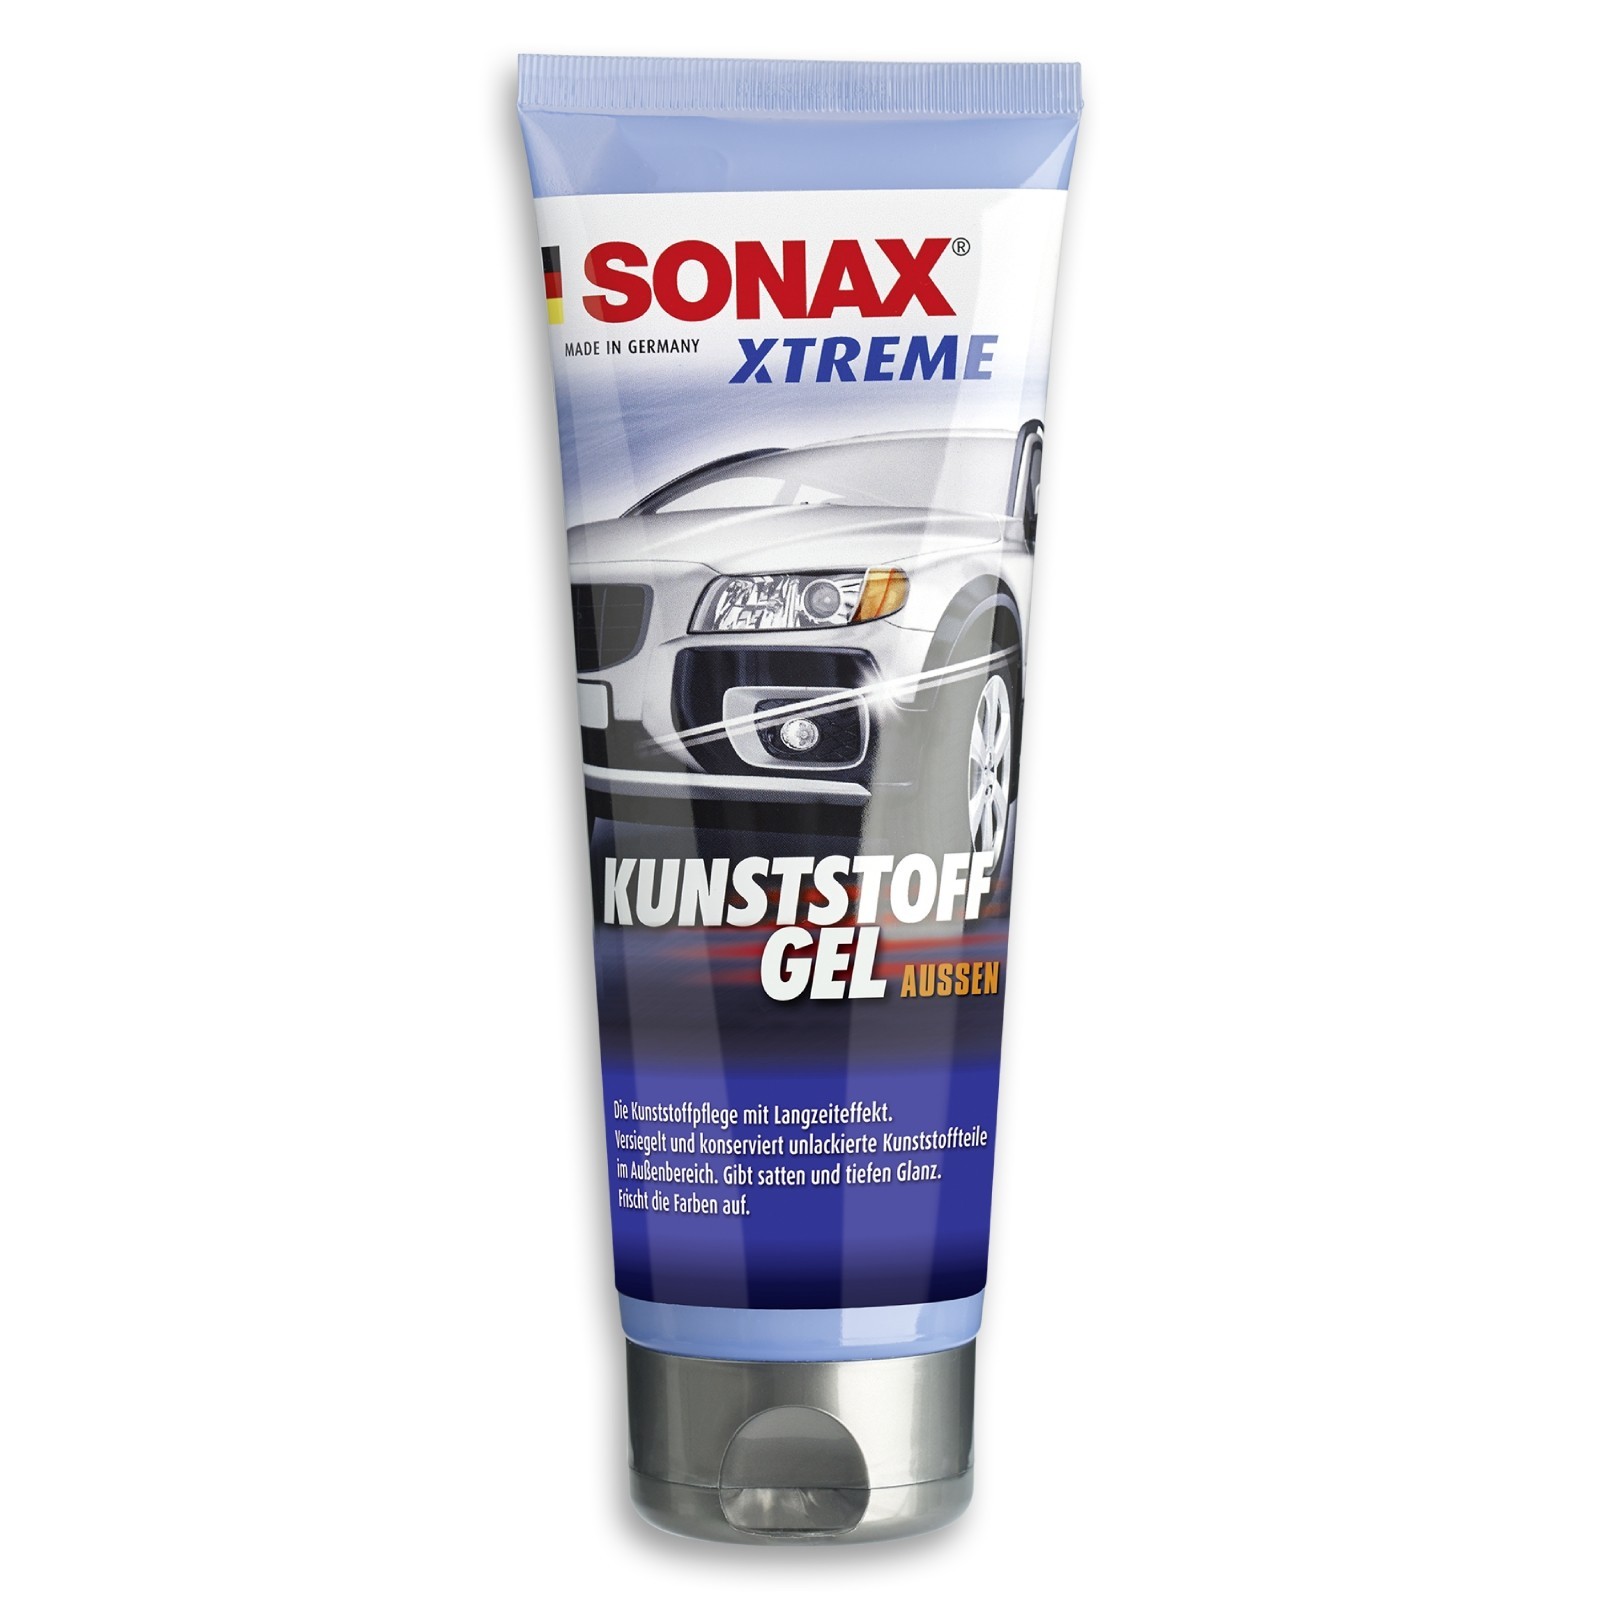 Sonax Xtreme KunststoffGel 